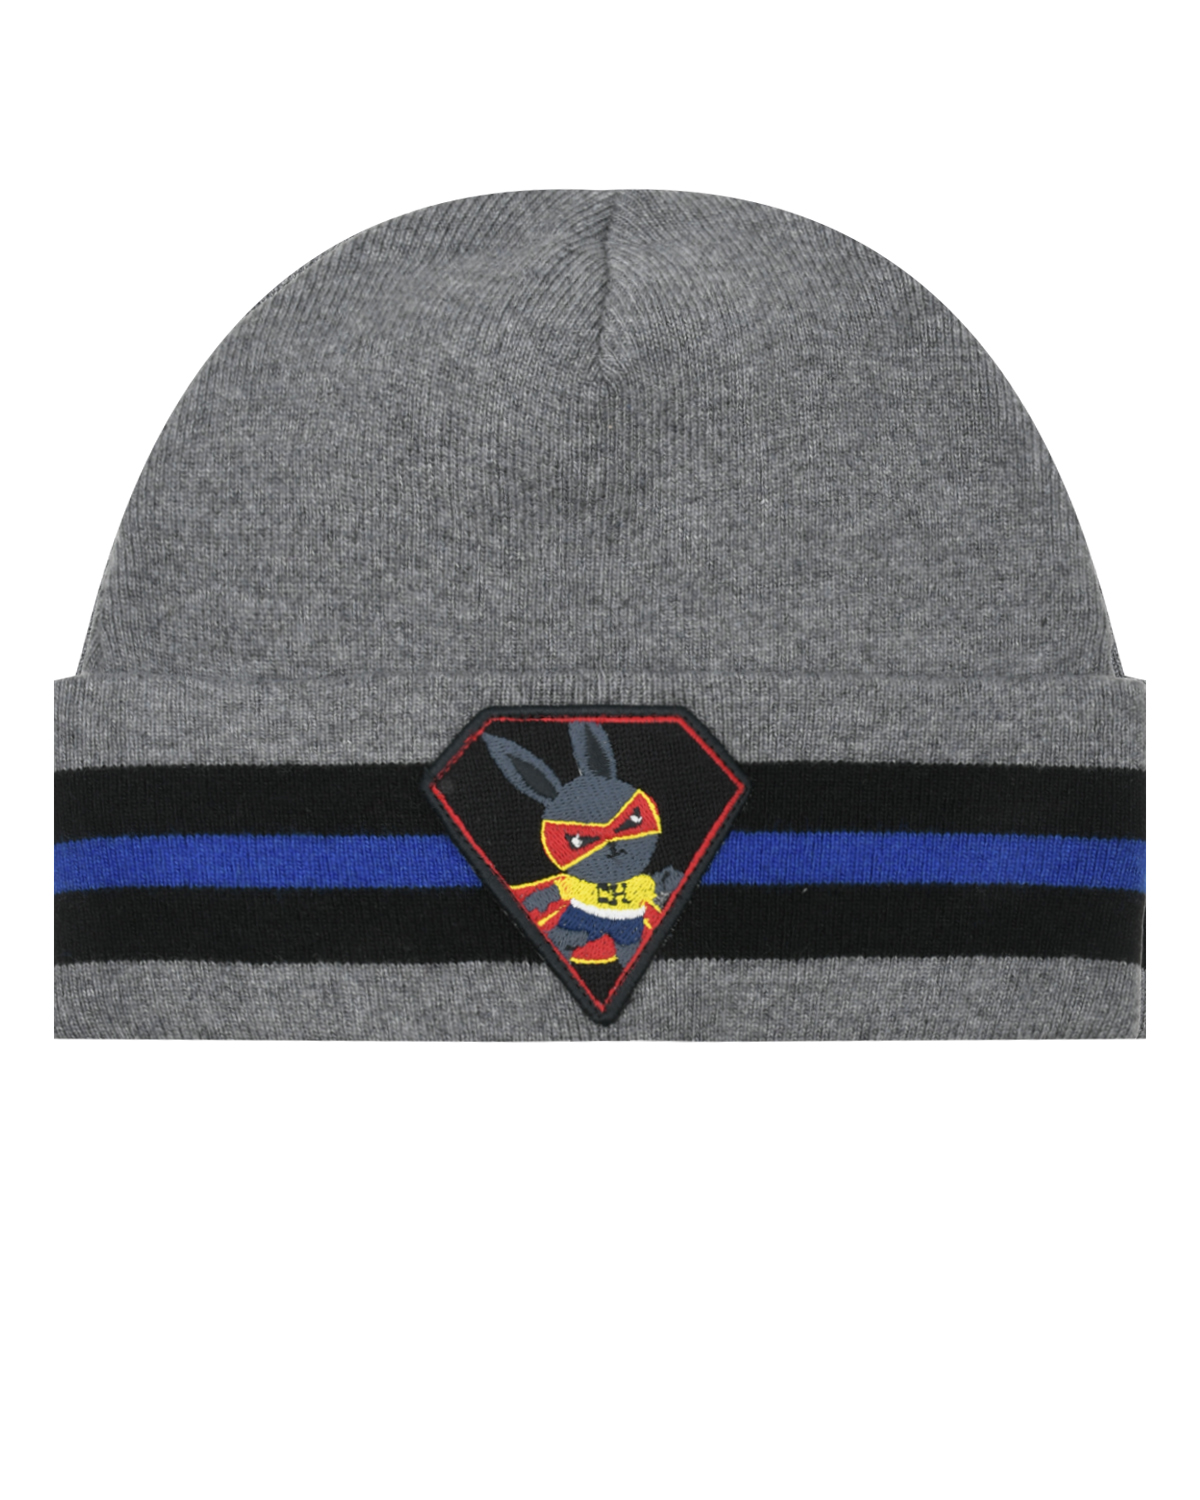 Темно-серая шапка с патчем "заяц" Chobi детское, размер 53, цвет серый